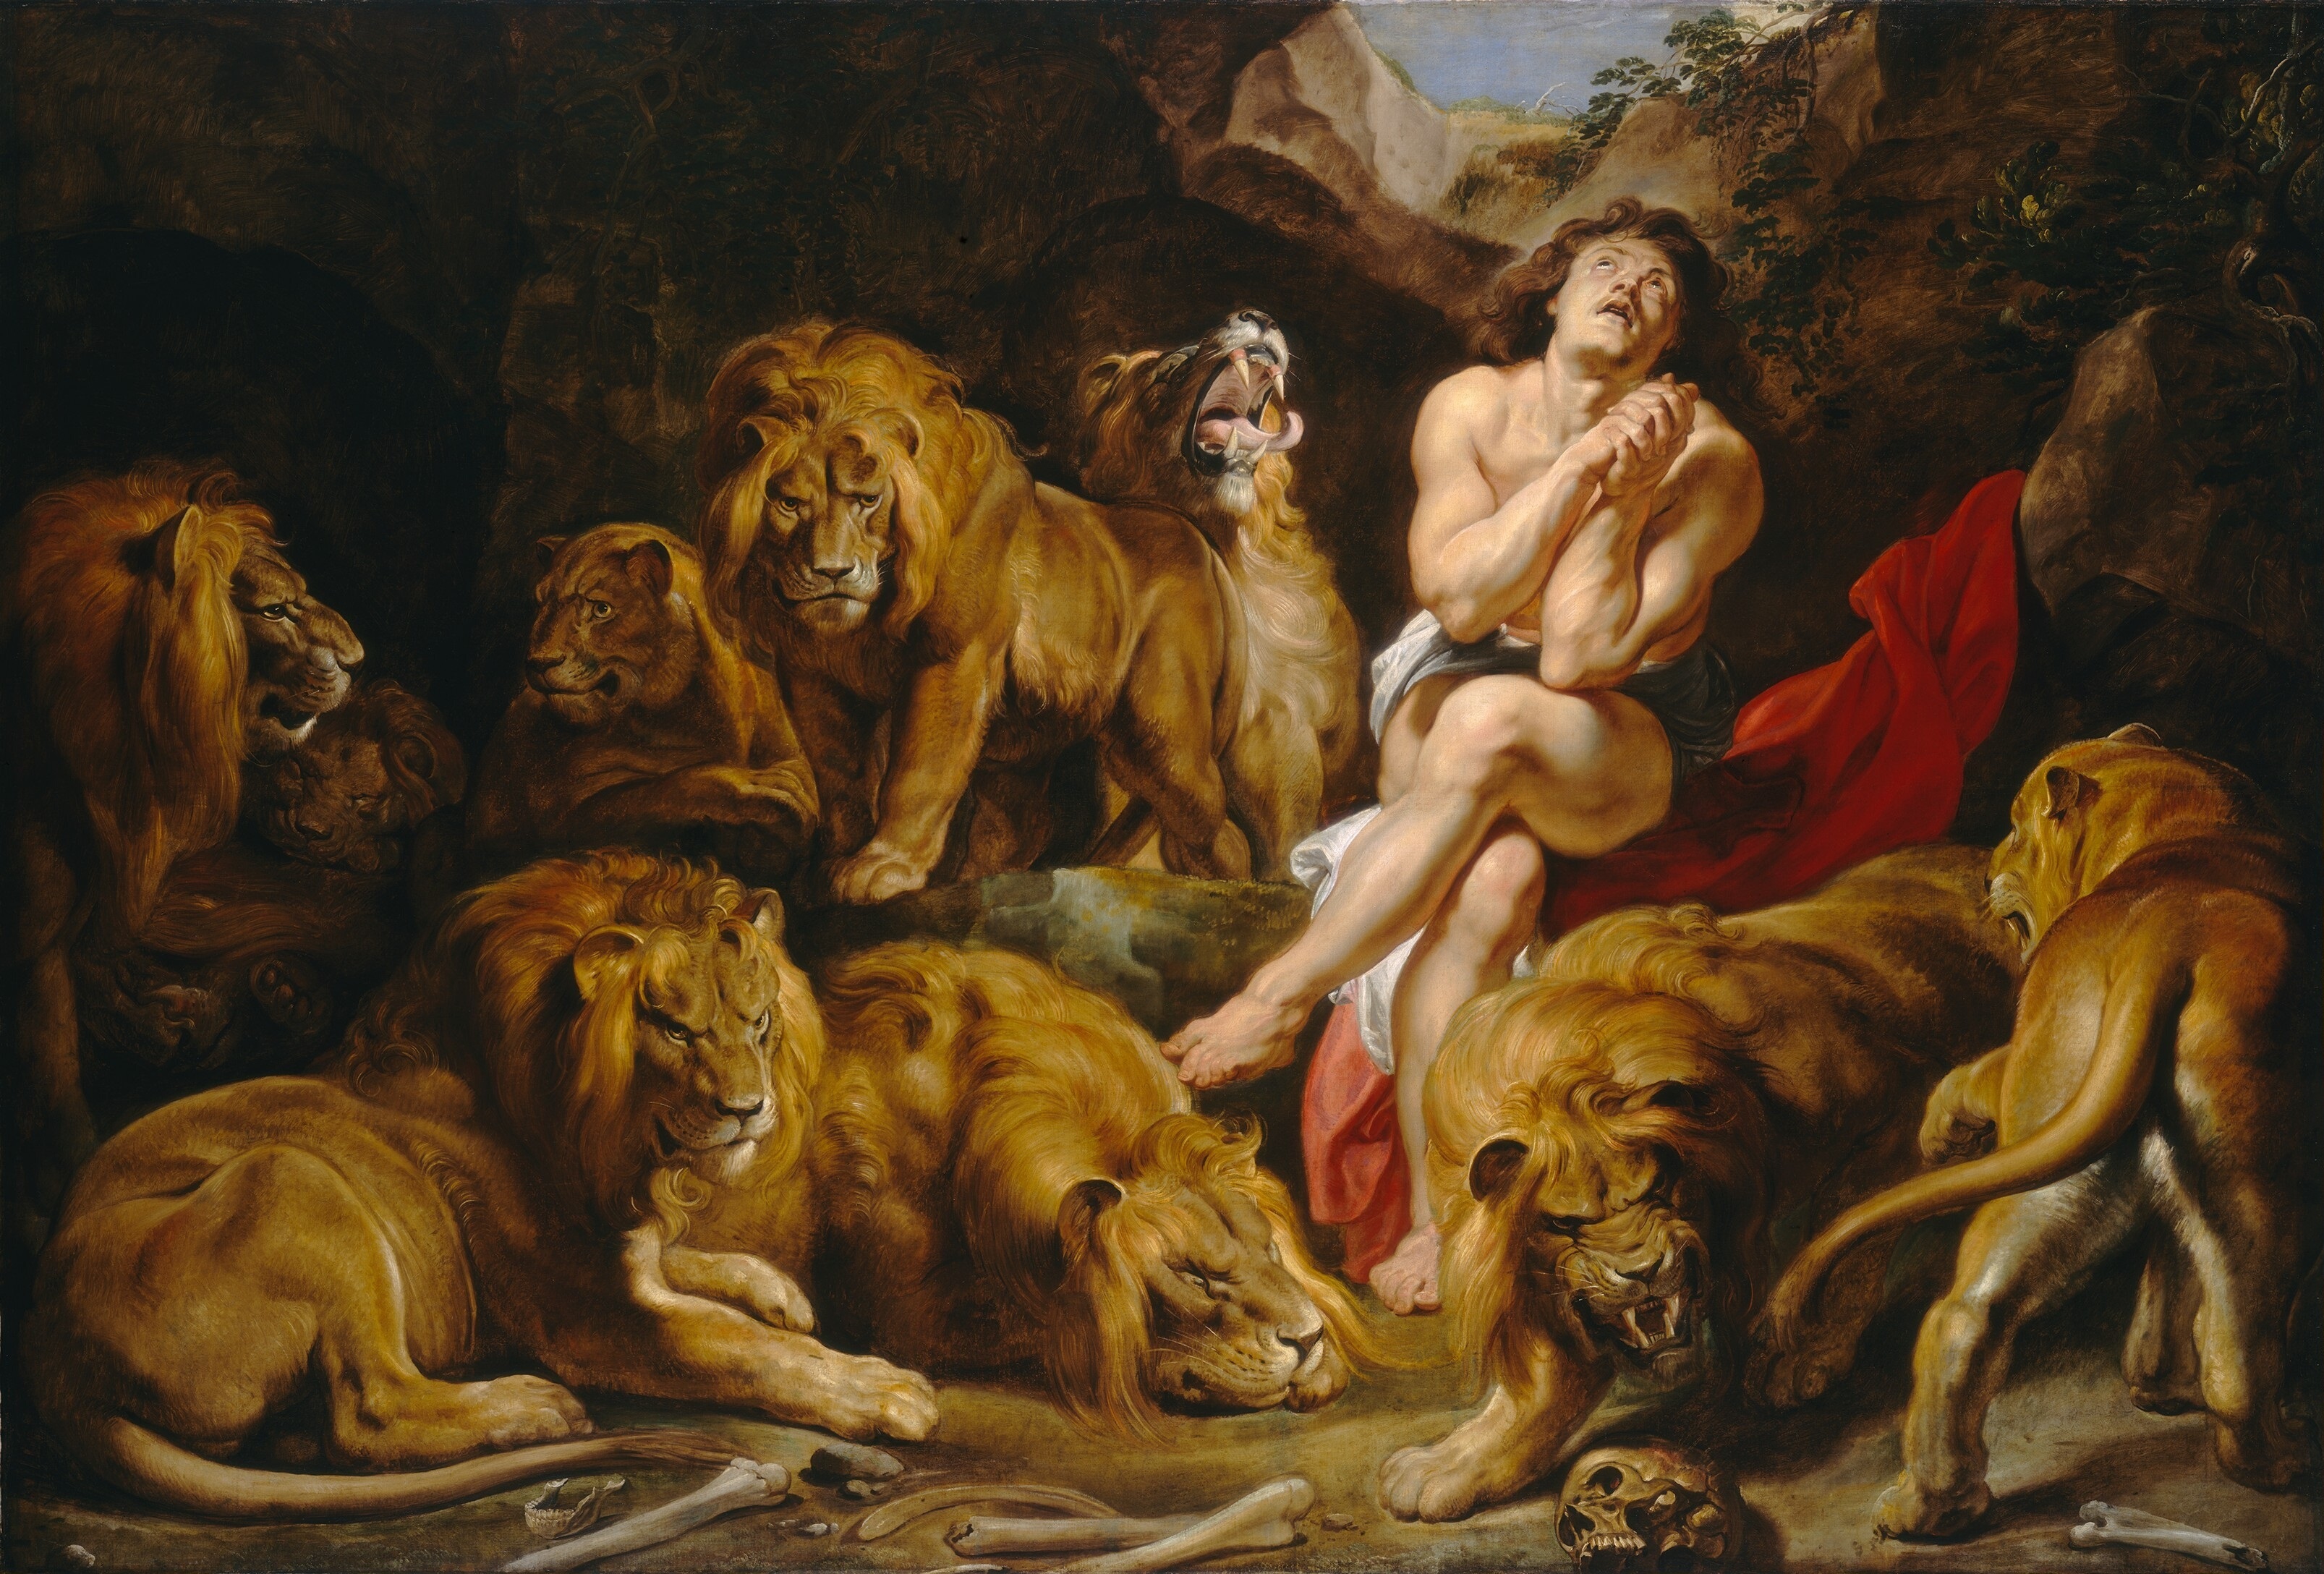 Даниил в яме со львами by Peter Paul Rubens - ок. 1614/1616 - 224.2 x 330.5 см 